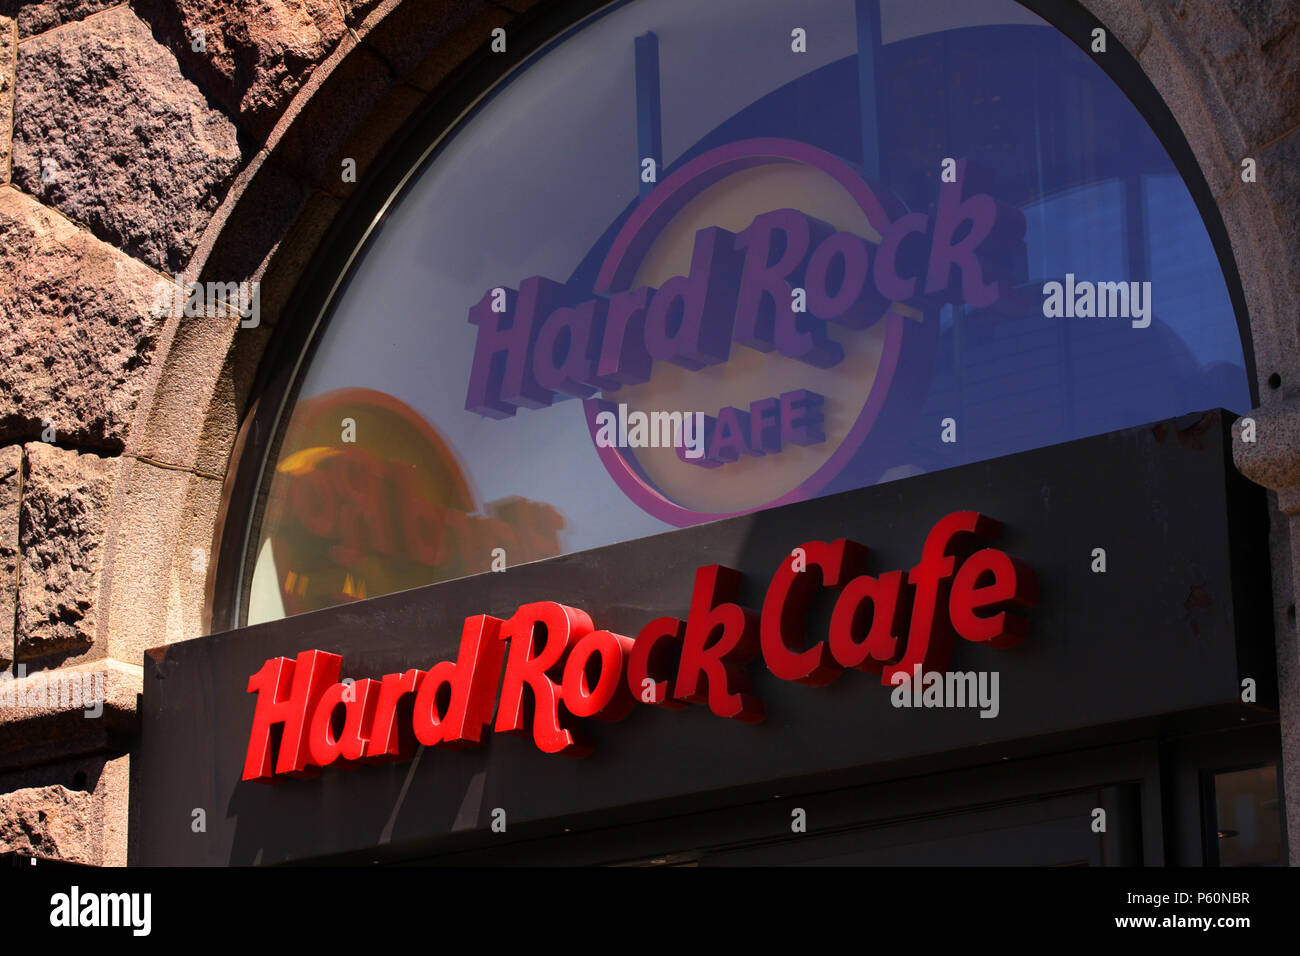 Copenhagen, Denmark - June 26, 2018: Hard Rock Cafe Inc. is a chain of theme restaurants founded in 1971, Restaurant sign on building Stock Photo